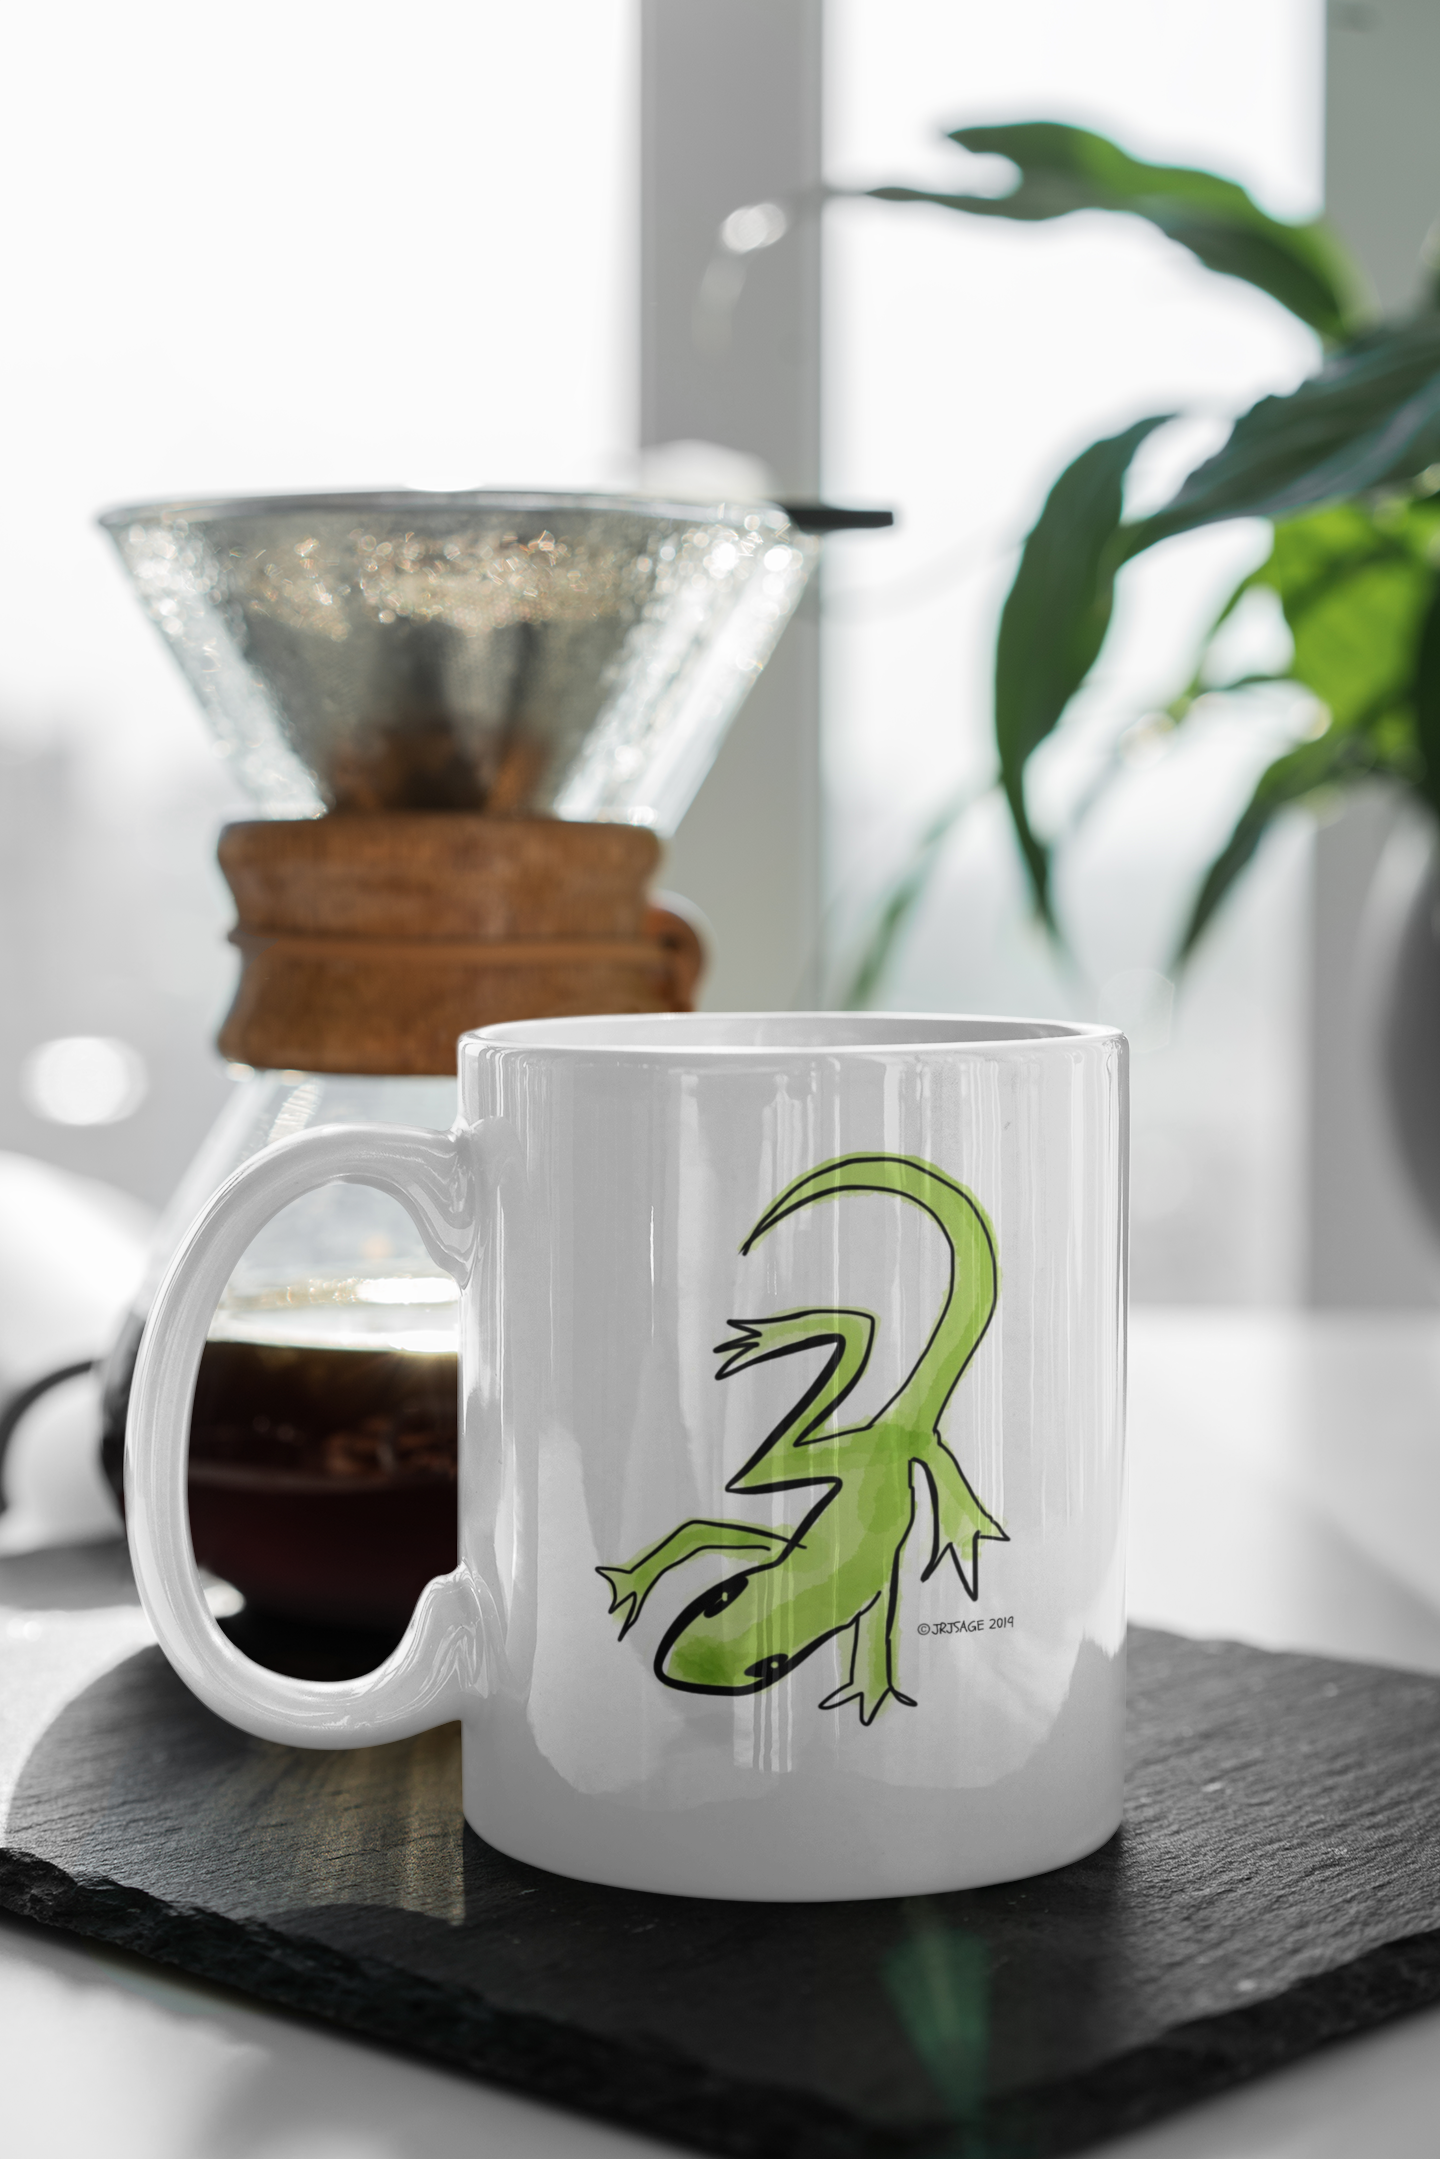 Lounge Lizard Mug - Green Lizard Mugs - Illustrated Gekko design by Hector and Bone on a table